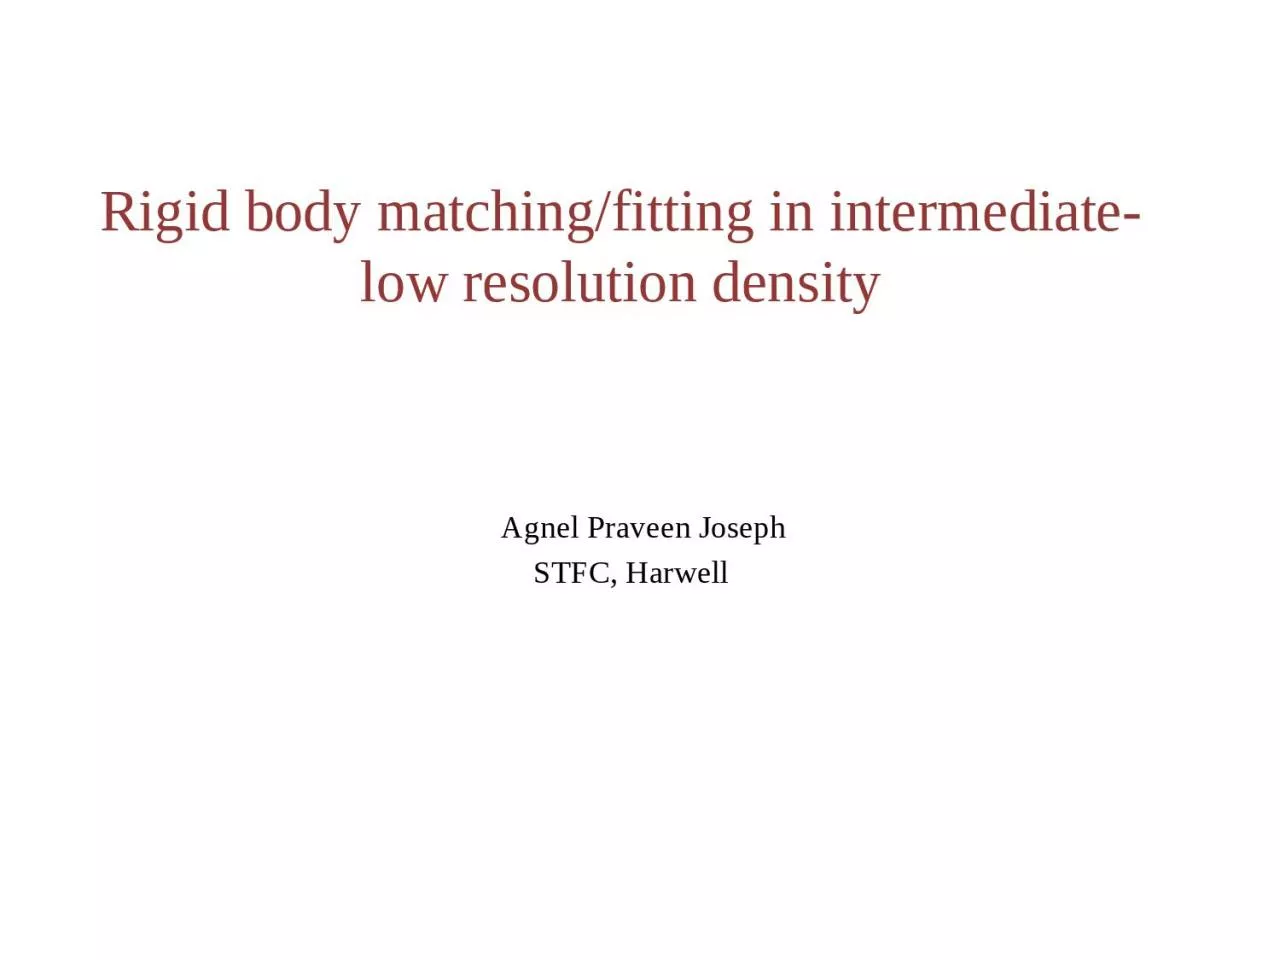 Rigid body matching/fitting in intermediate-low resolution density